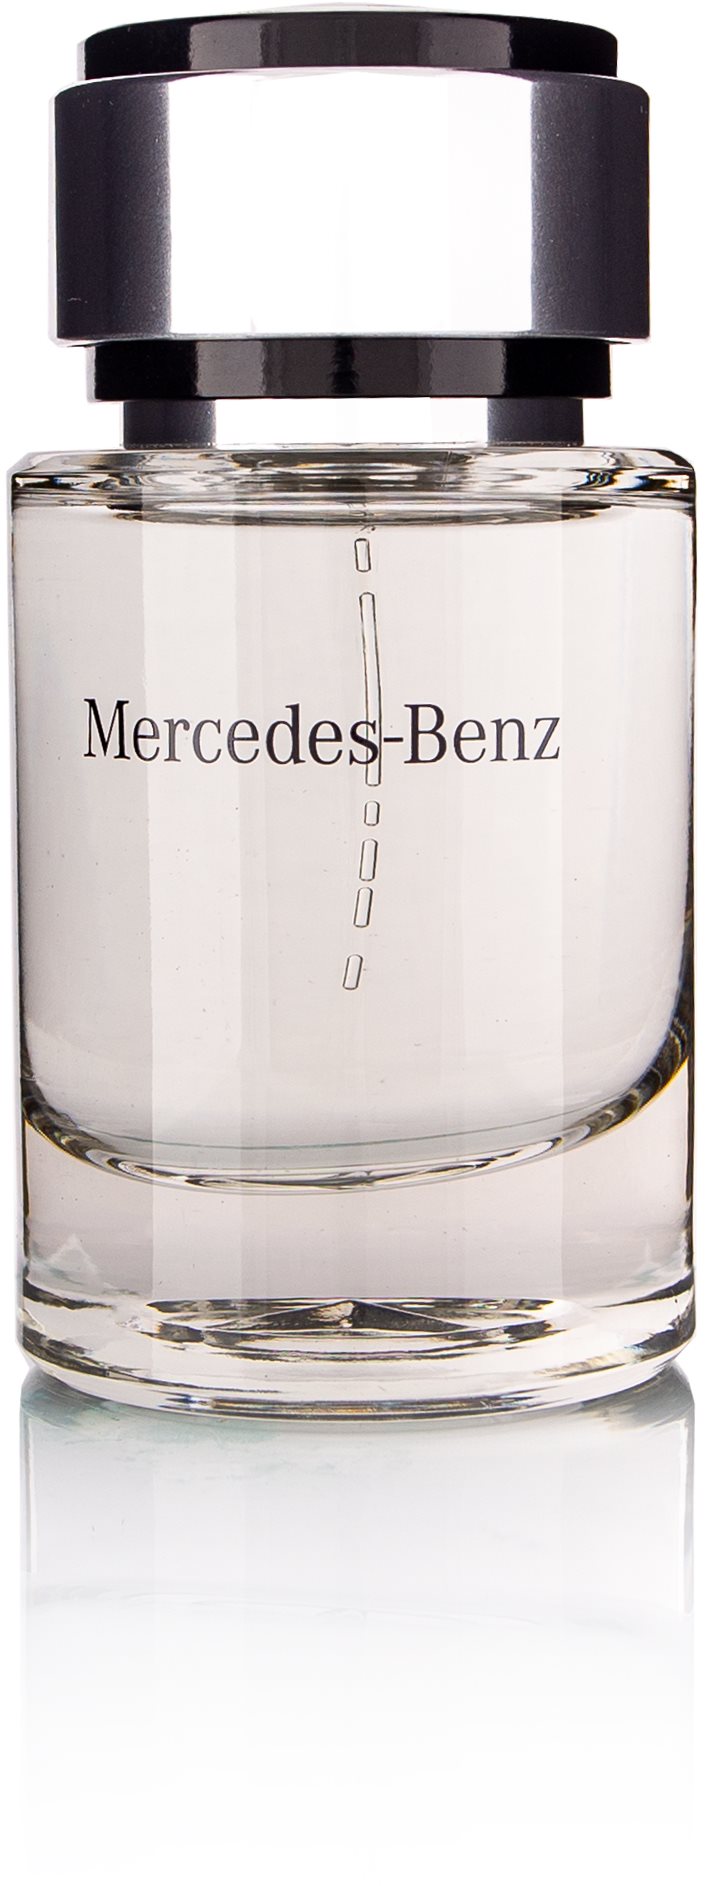 MERCEDES-BENZ Mercedez Benz EdT